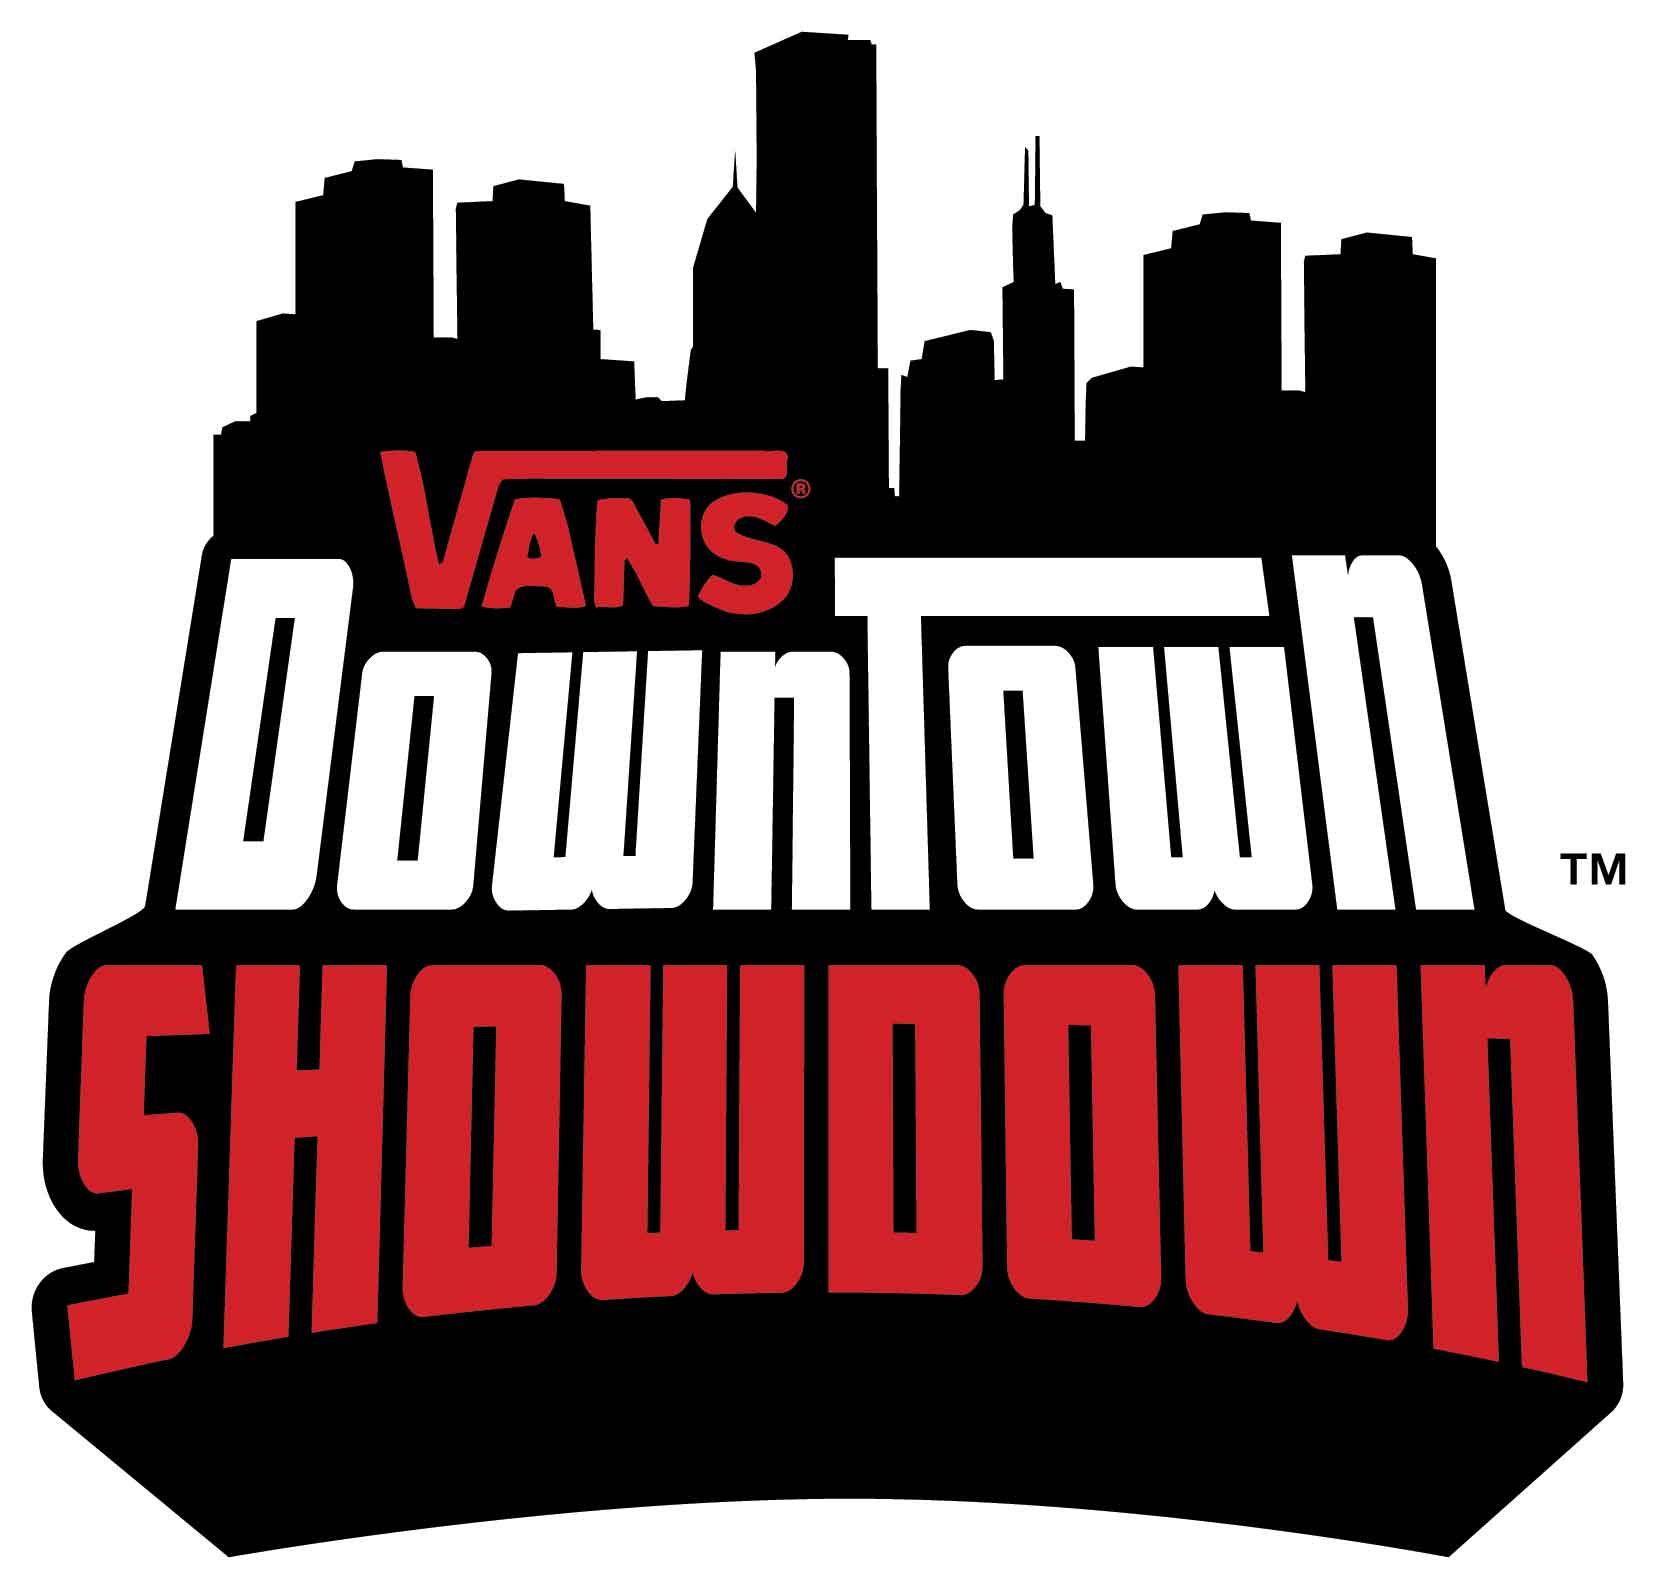 Vans Skate Logo - Vans Downtown Showdown